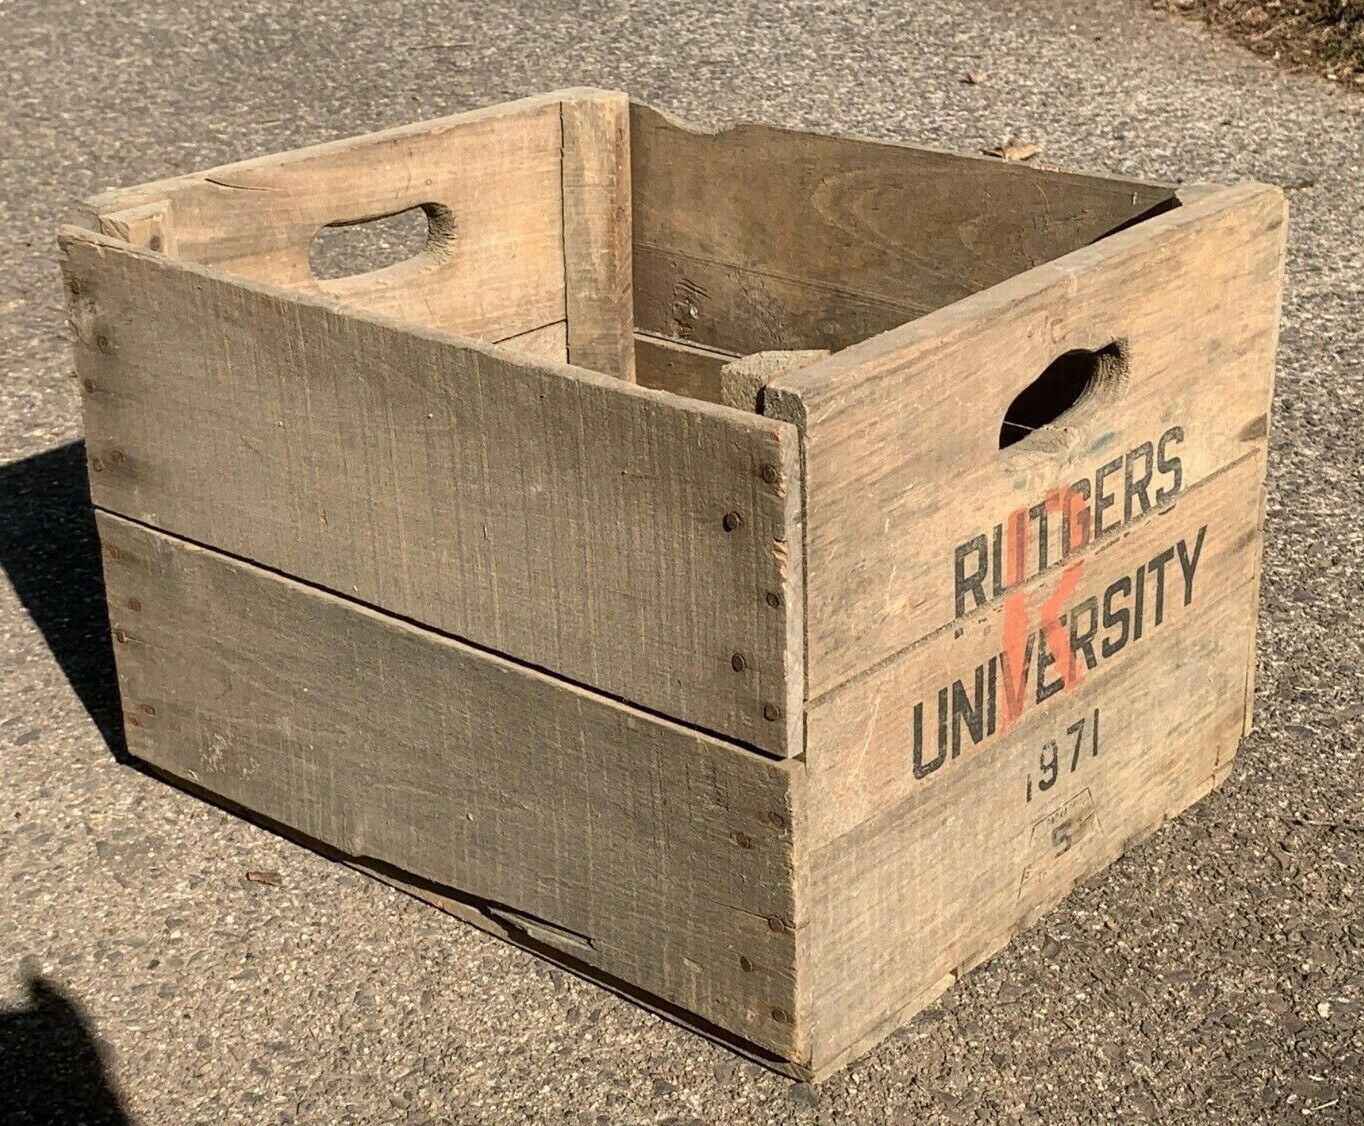 Ultra rare antique 1971 Rutgers University New Jersey crate